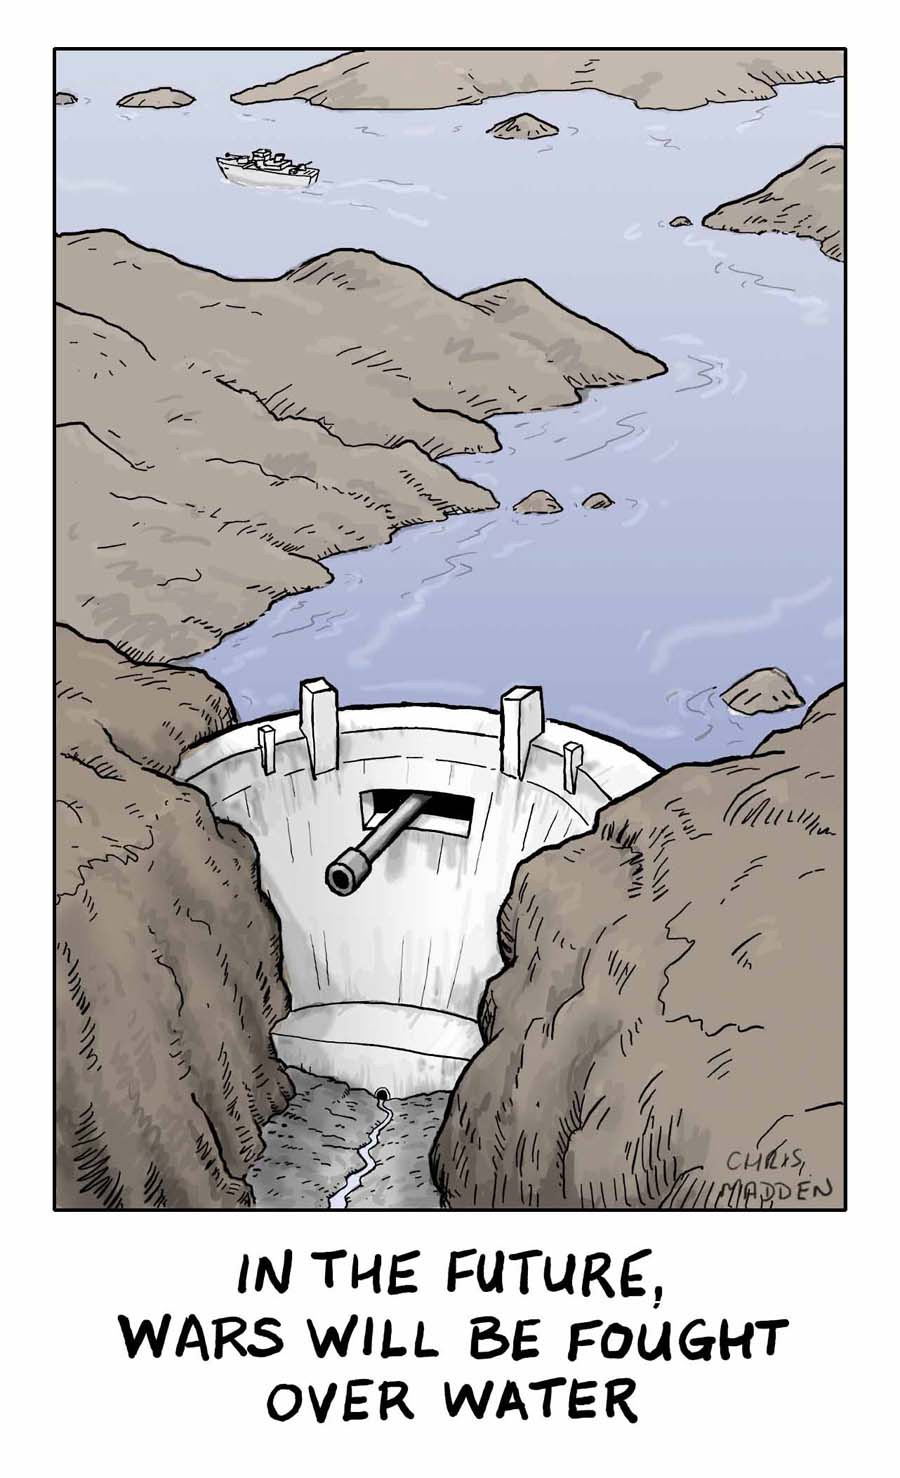 water wars cartoon